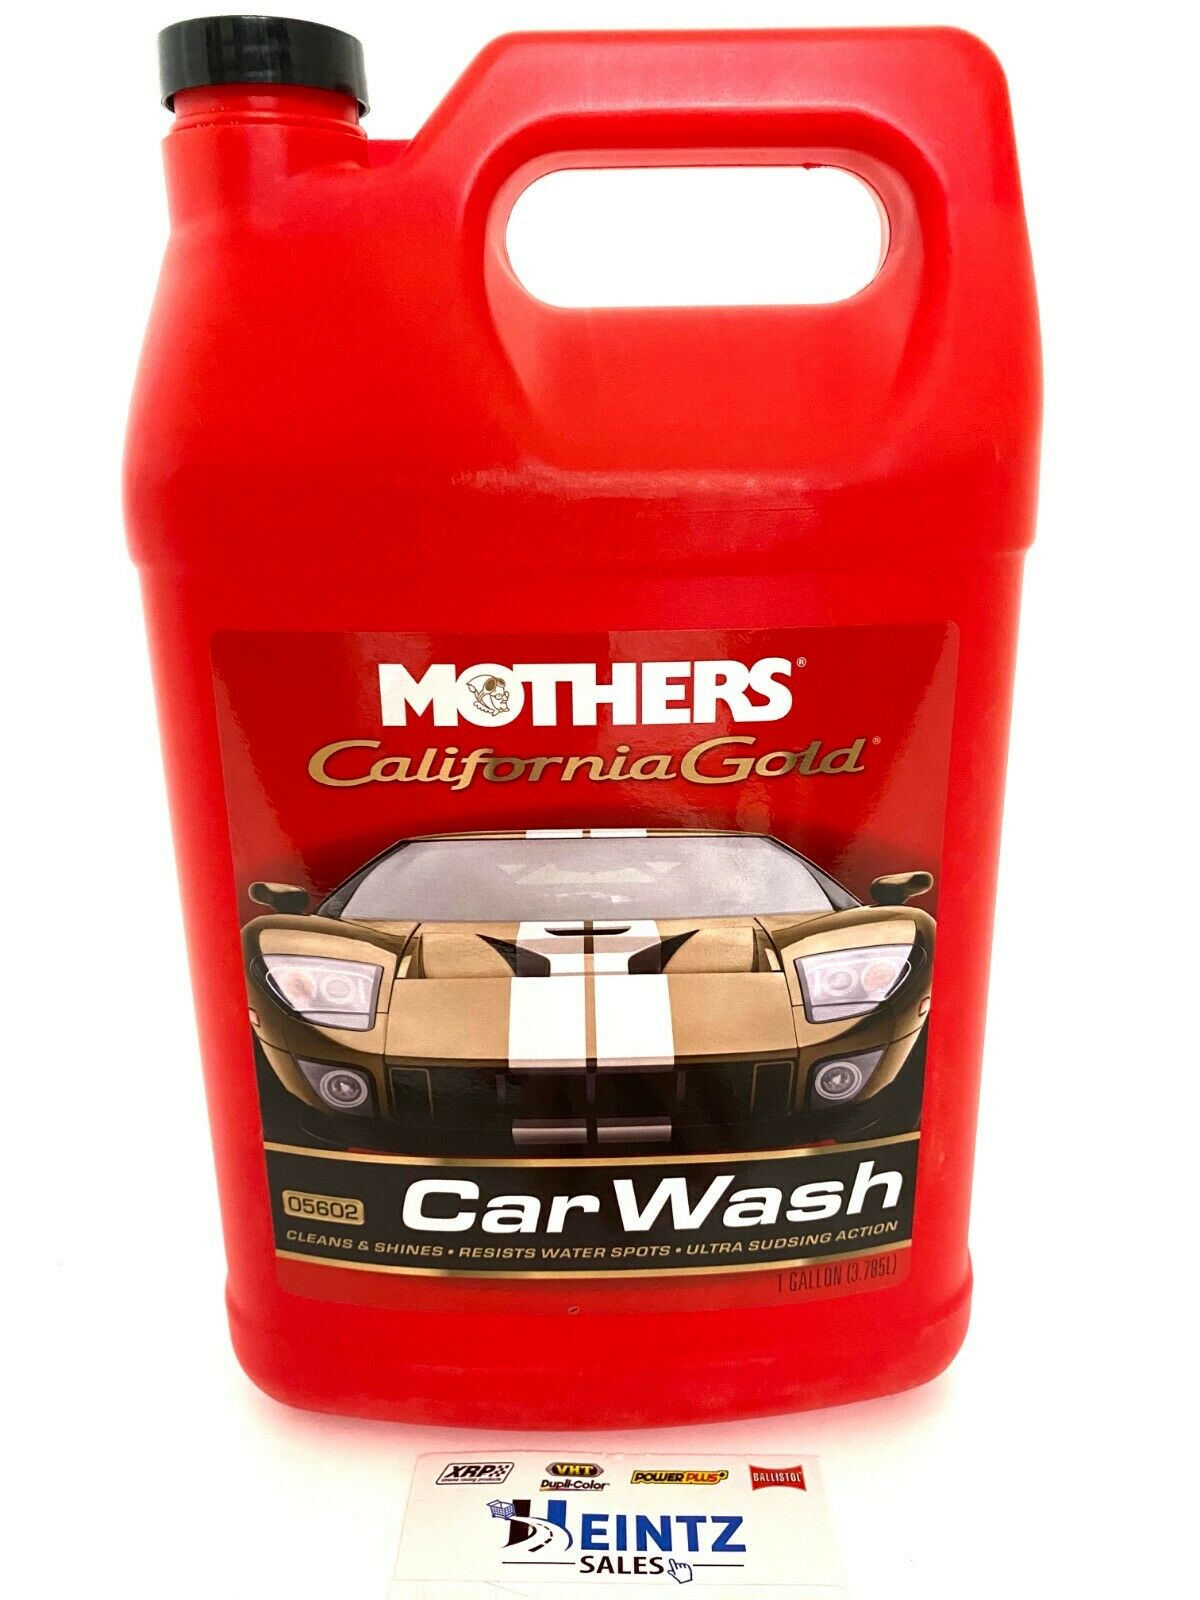 MOTHERS 05602 California Gold Car Wash - Resists water spots - 1 GALLON